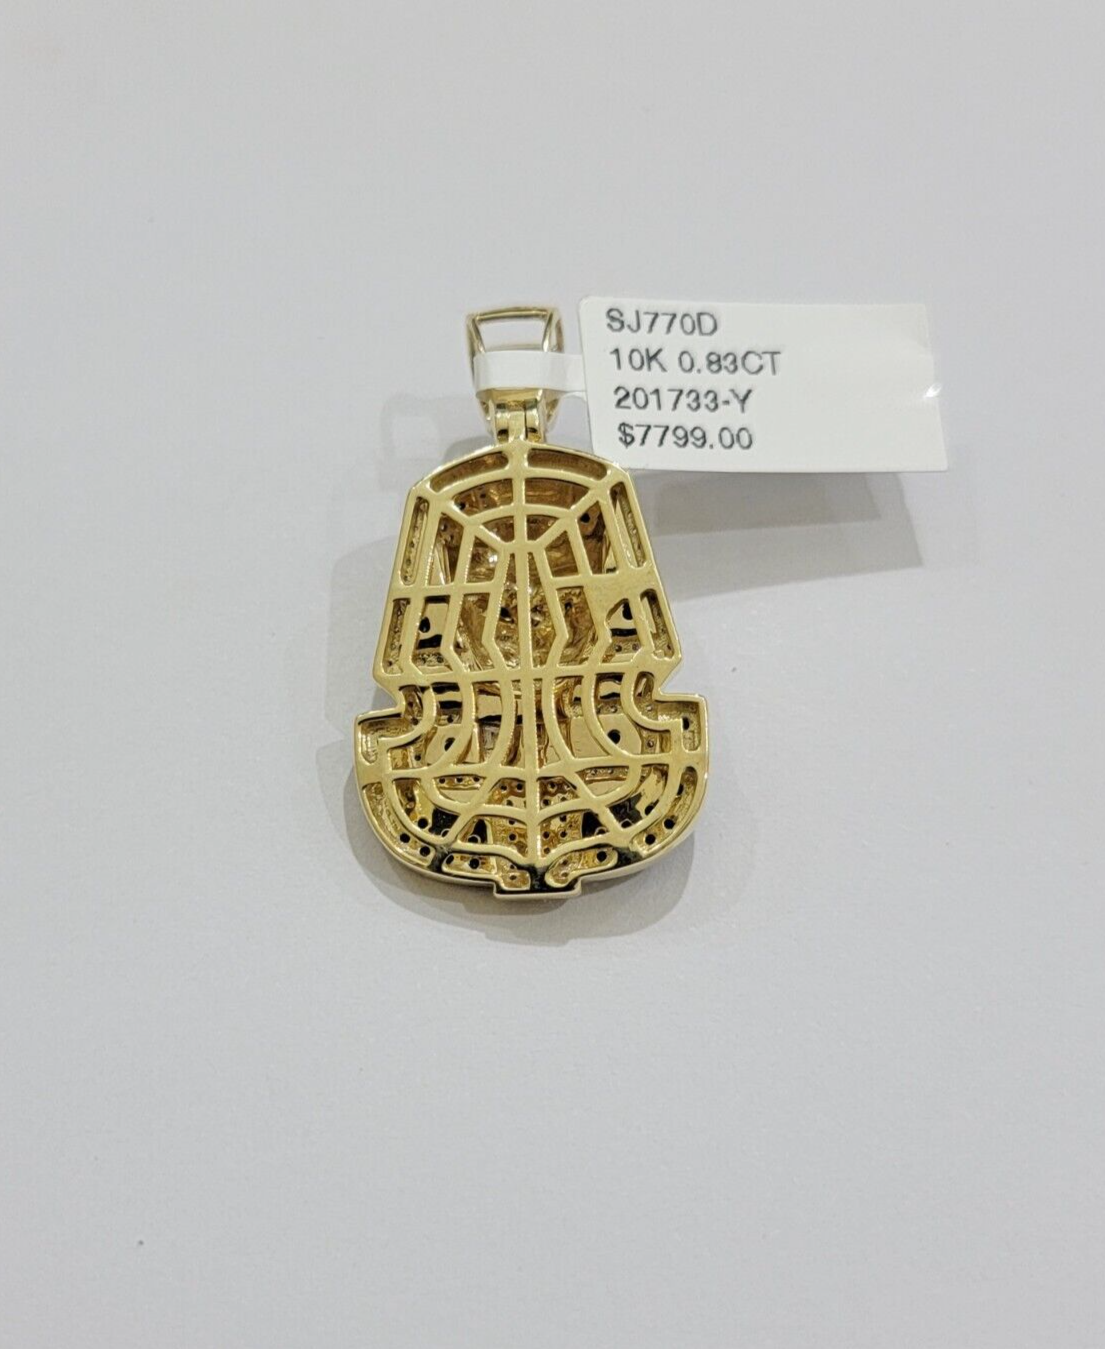 Black Diamond Pharoah Charm Pendant 10kt Yellow Gold 0.80 CT Chain Necklace SALE